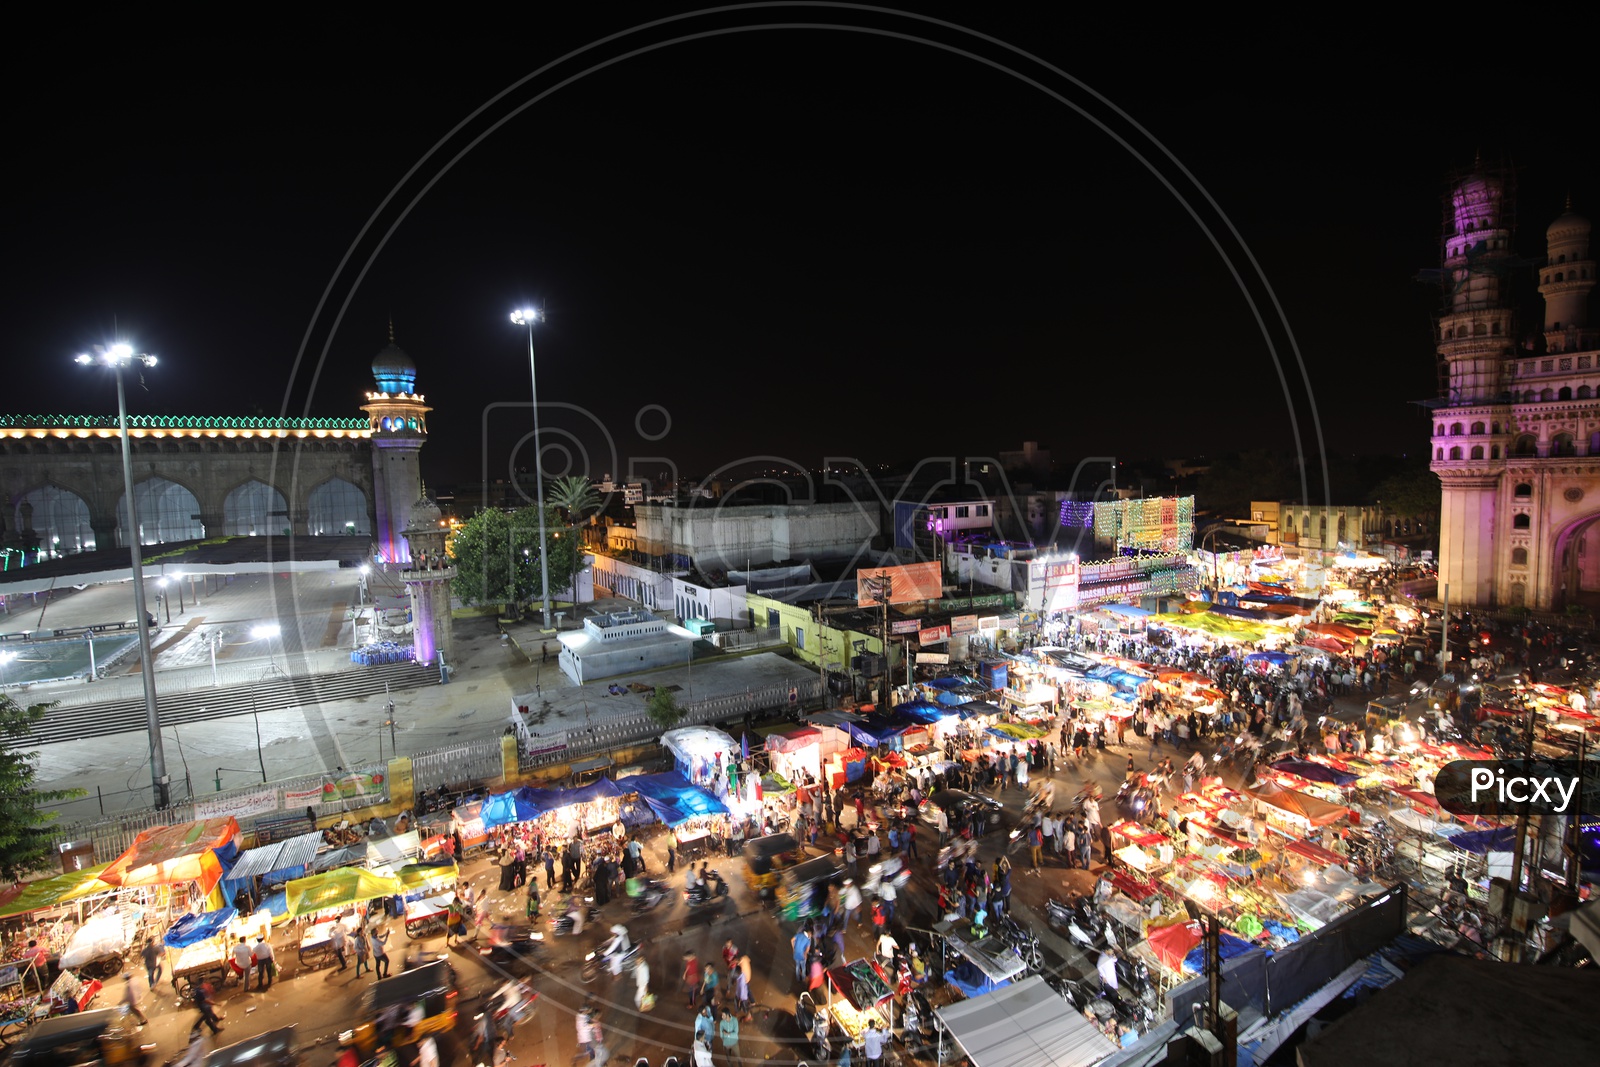 Busy Charminar Streets With Vendor Stalls During Ramzan Ramdan Season With a View Of Mecca Masjid